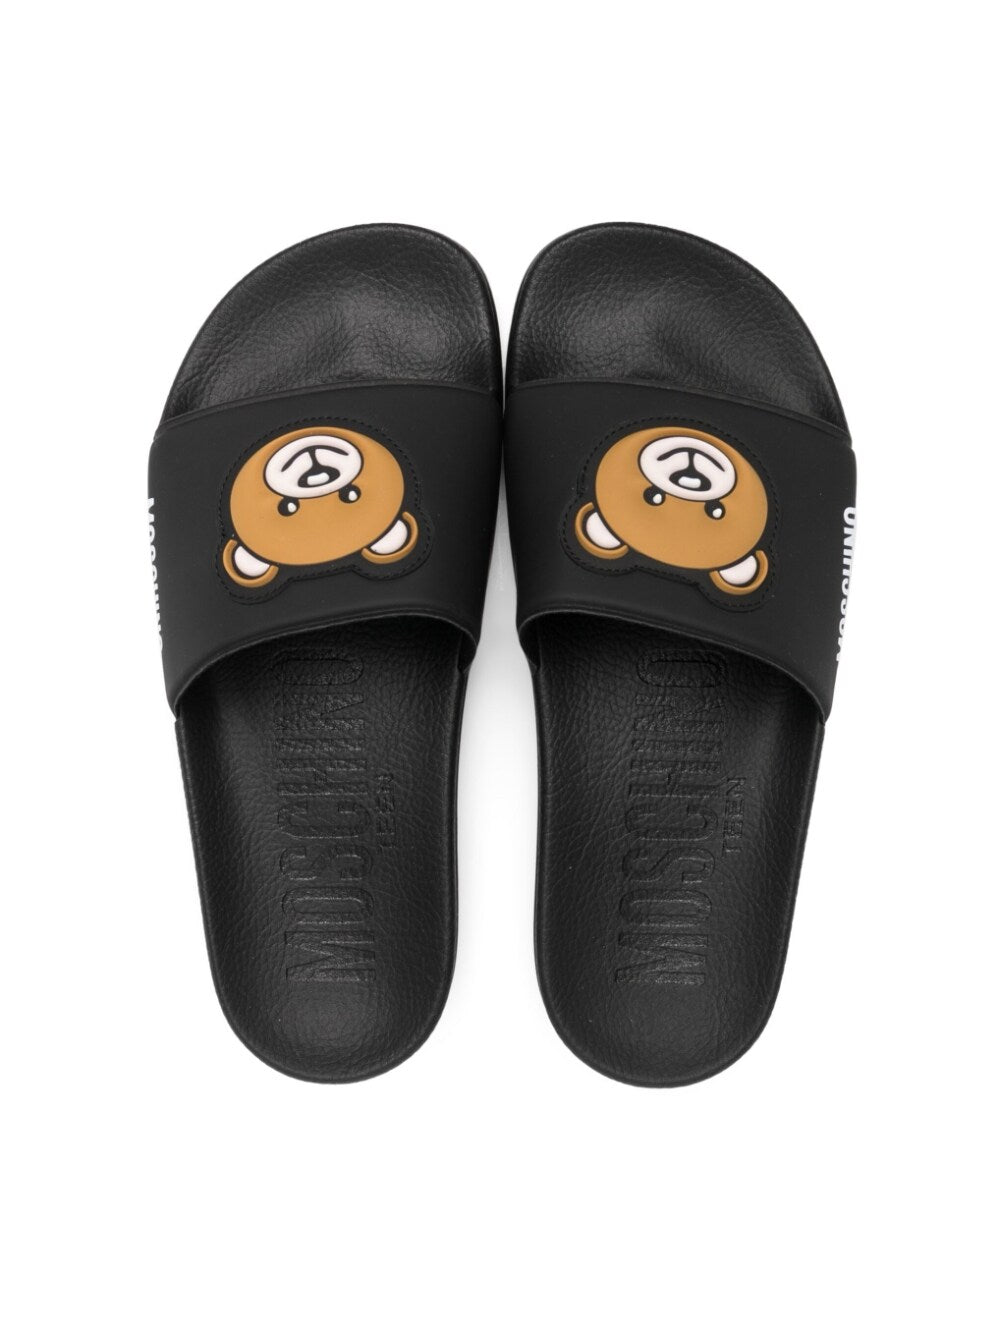 Black children's slippers with logo